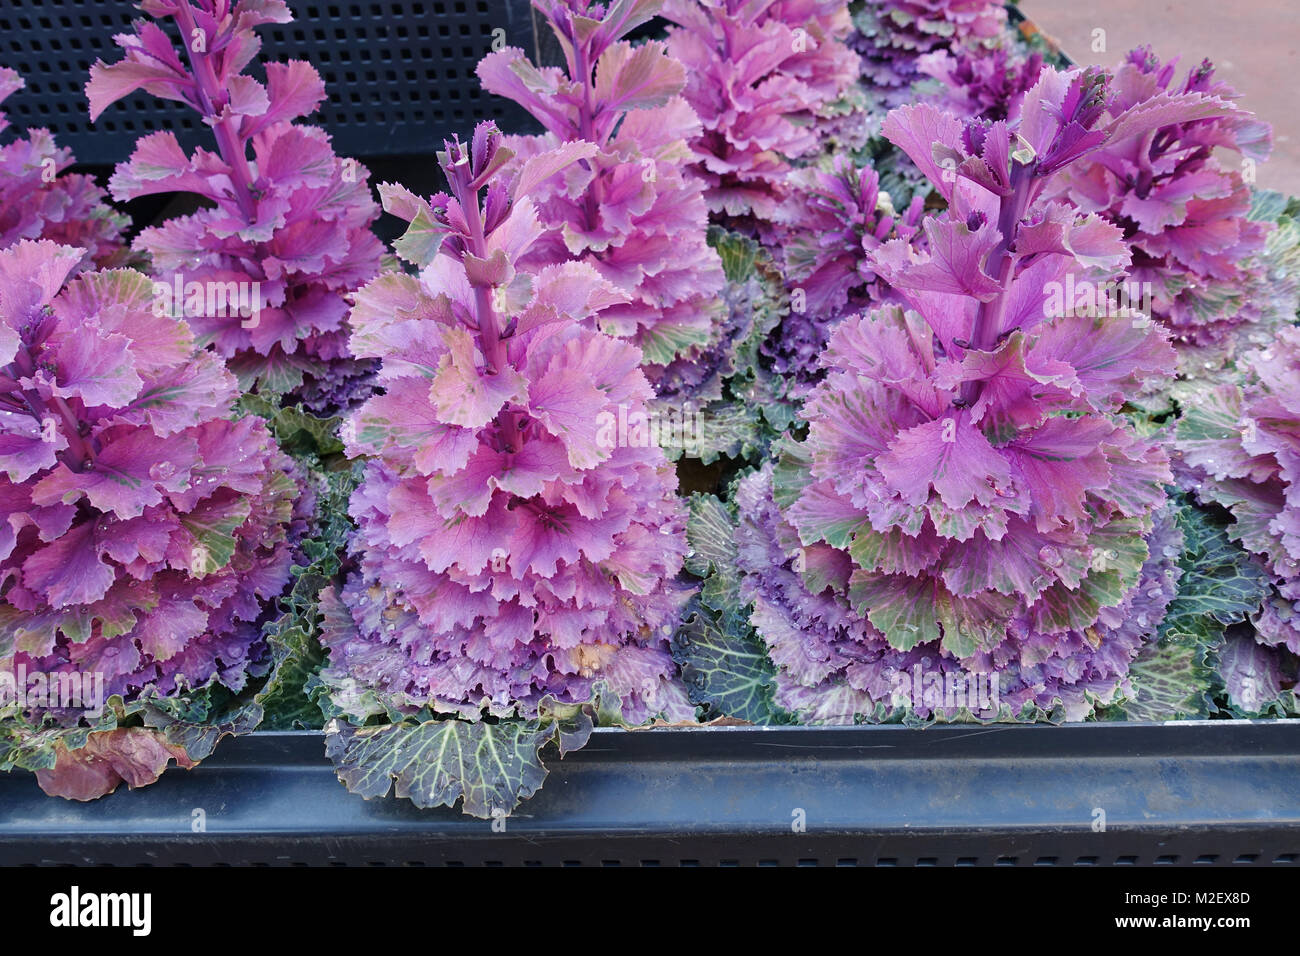 Brassica oleracea acephala o conocido como ornamental de col rizada - Rosa Foto de stock